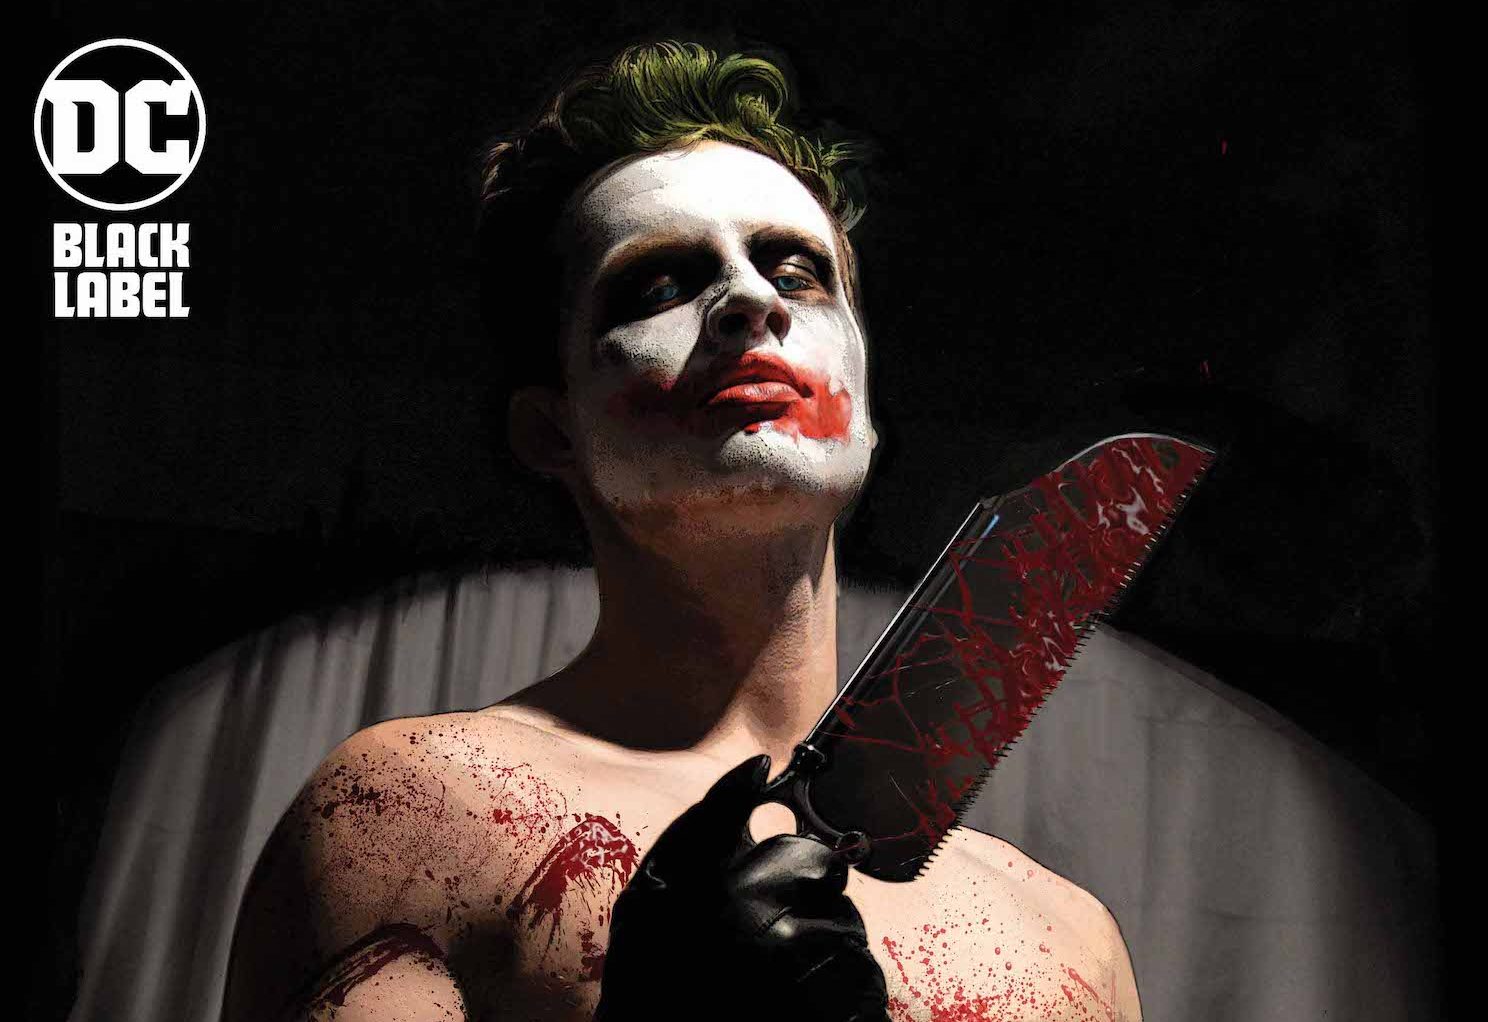 Joker/Harley: Criminal Sanity #4 is gripping psychological drama